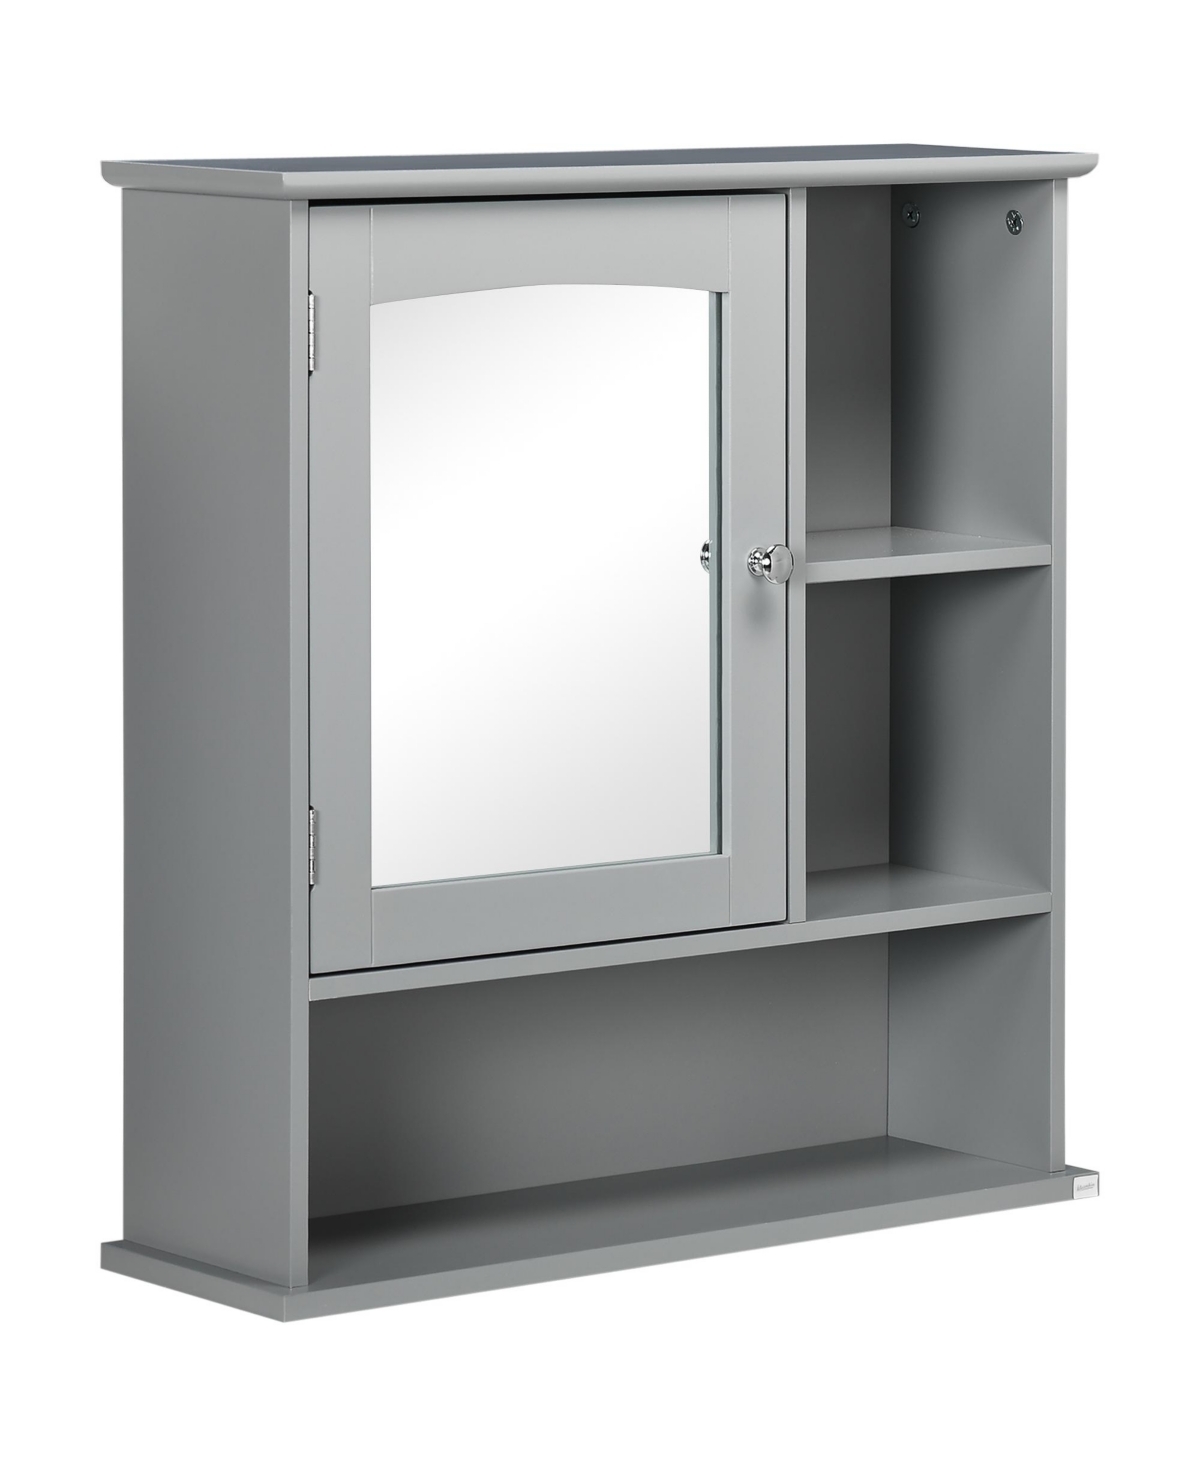 Wall-Mounted Bathroom Mirror Cabinet Organizer with Storage, Adjustable Shelf, and Magnetic Door Design, Grey - Grey